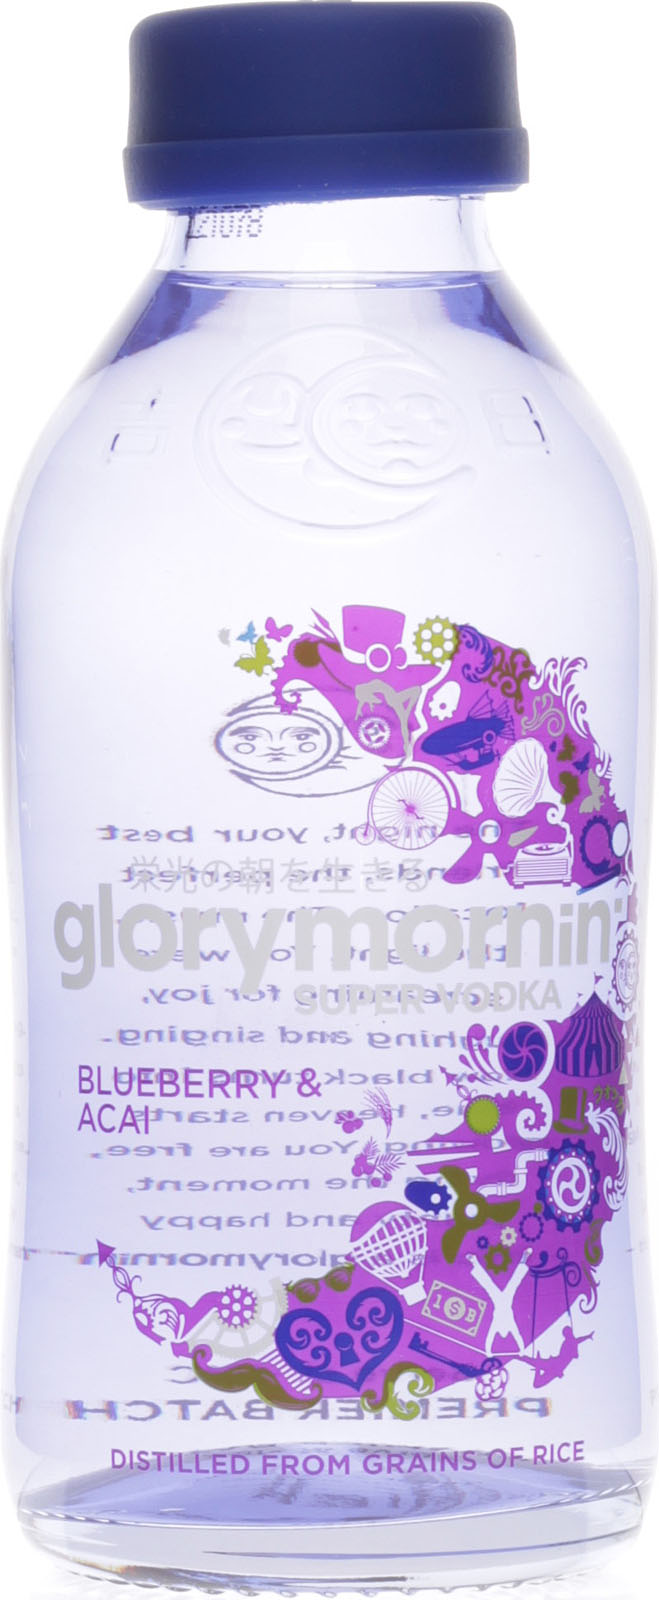 & Glory Super - Blueberry Vodka Acai Shop Mornin im